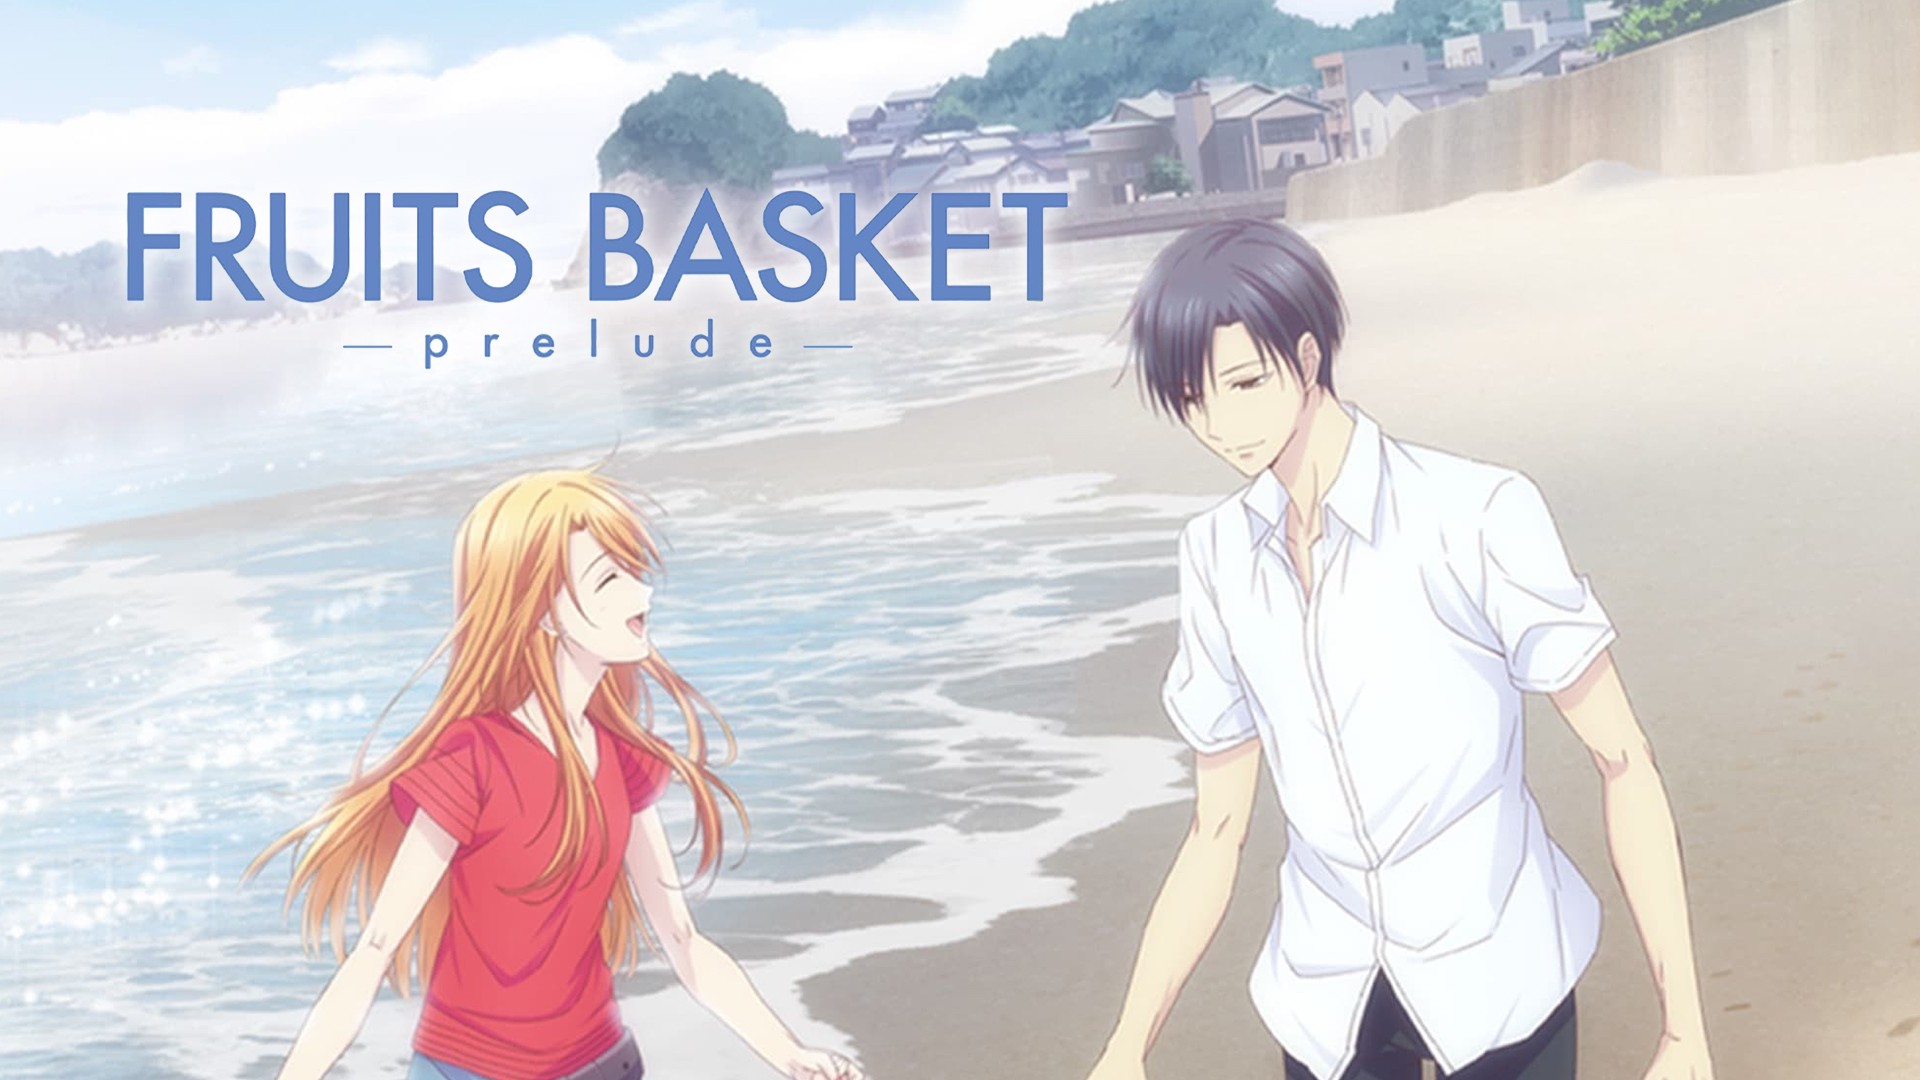 Fruits Basket: Prelude - Official Trailer 2 